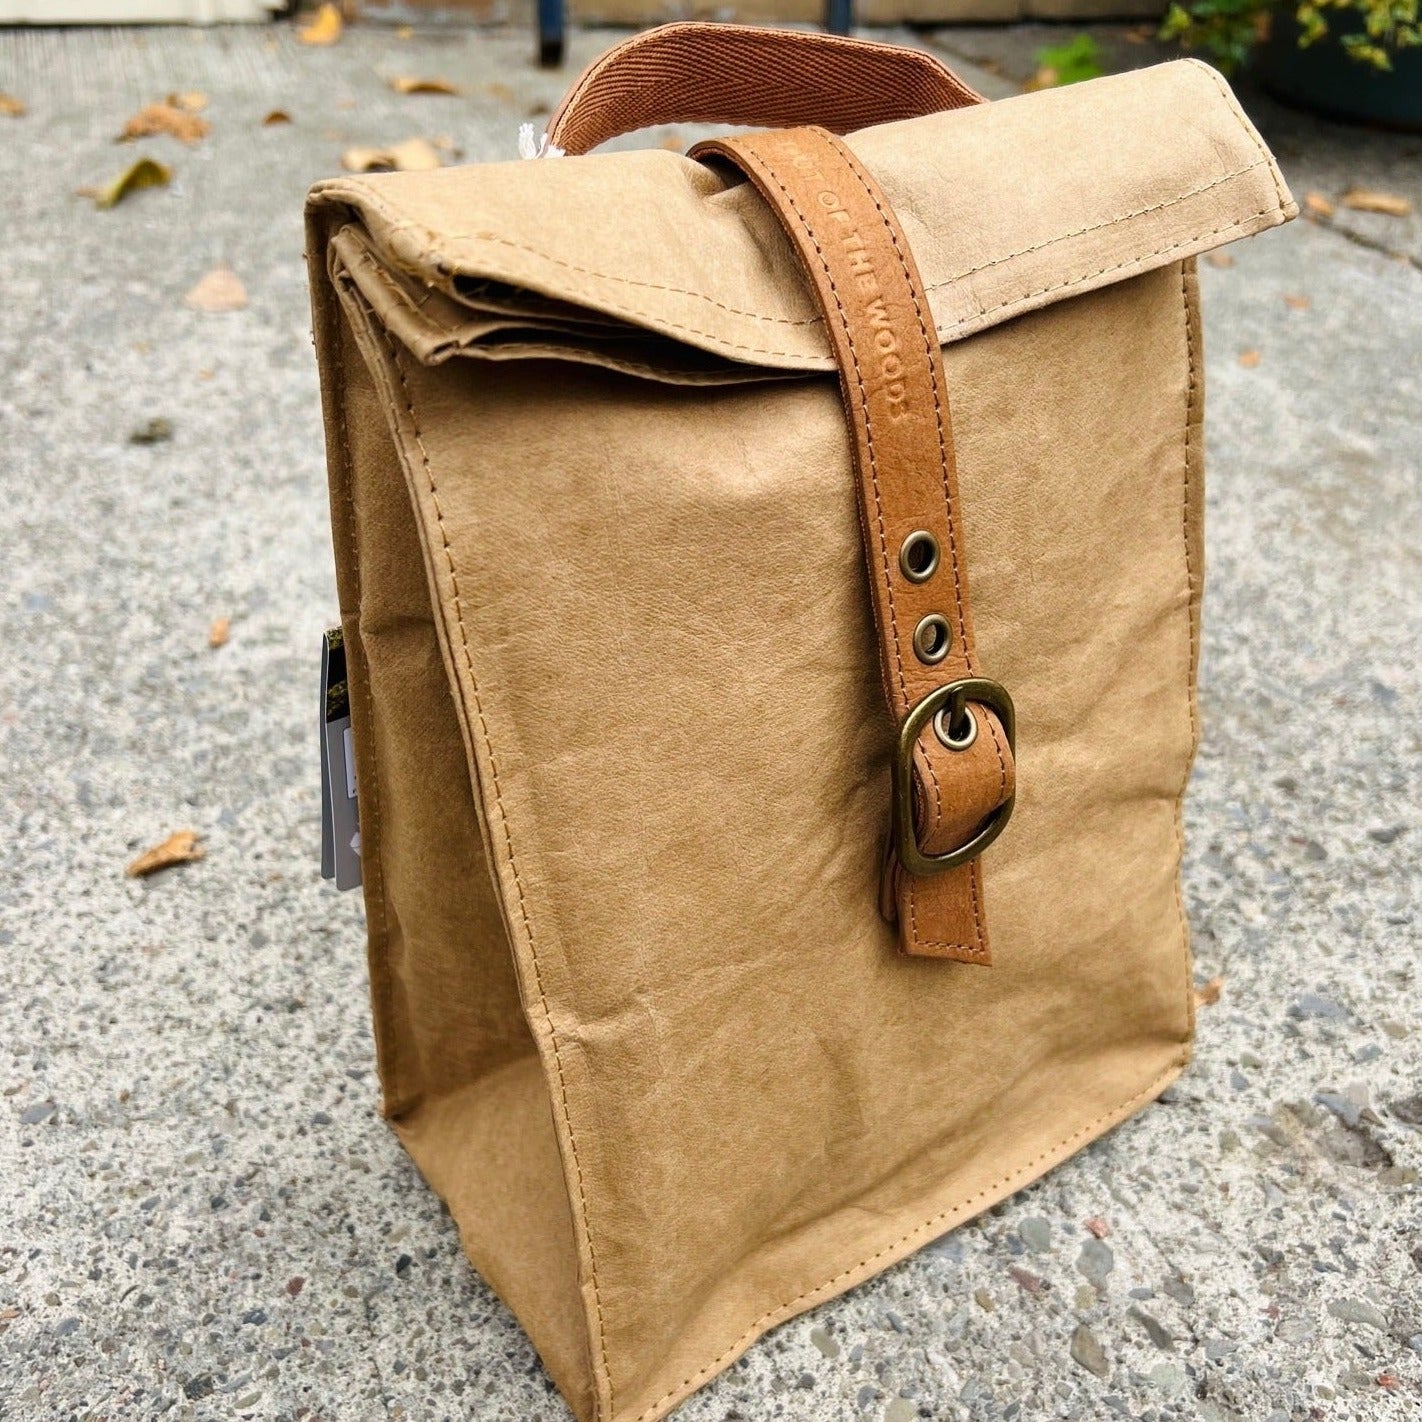 Reusable Lunch Bag